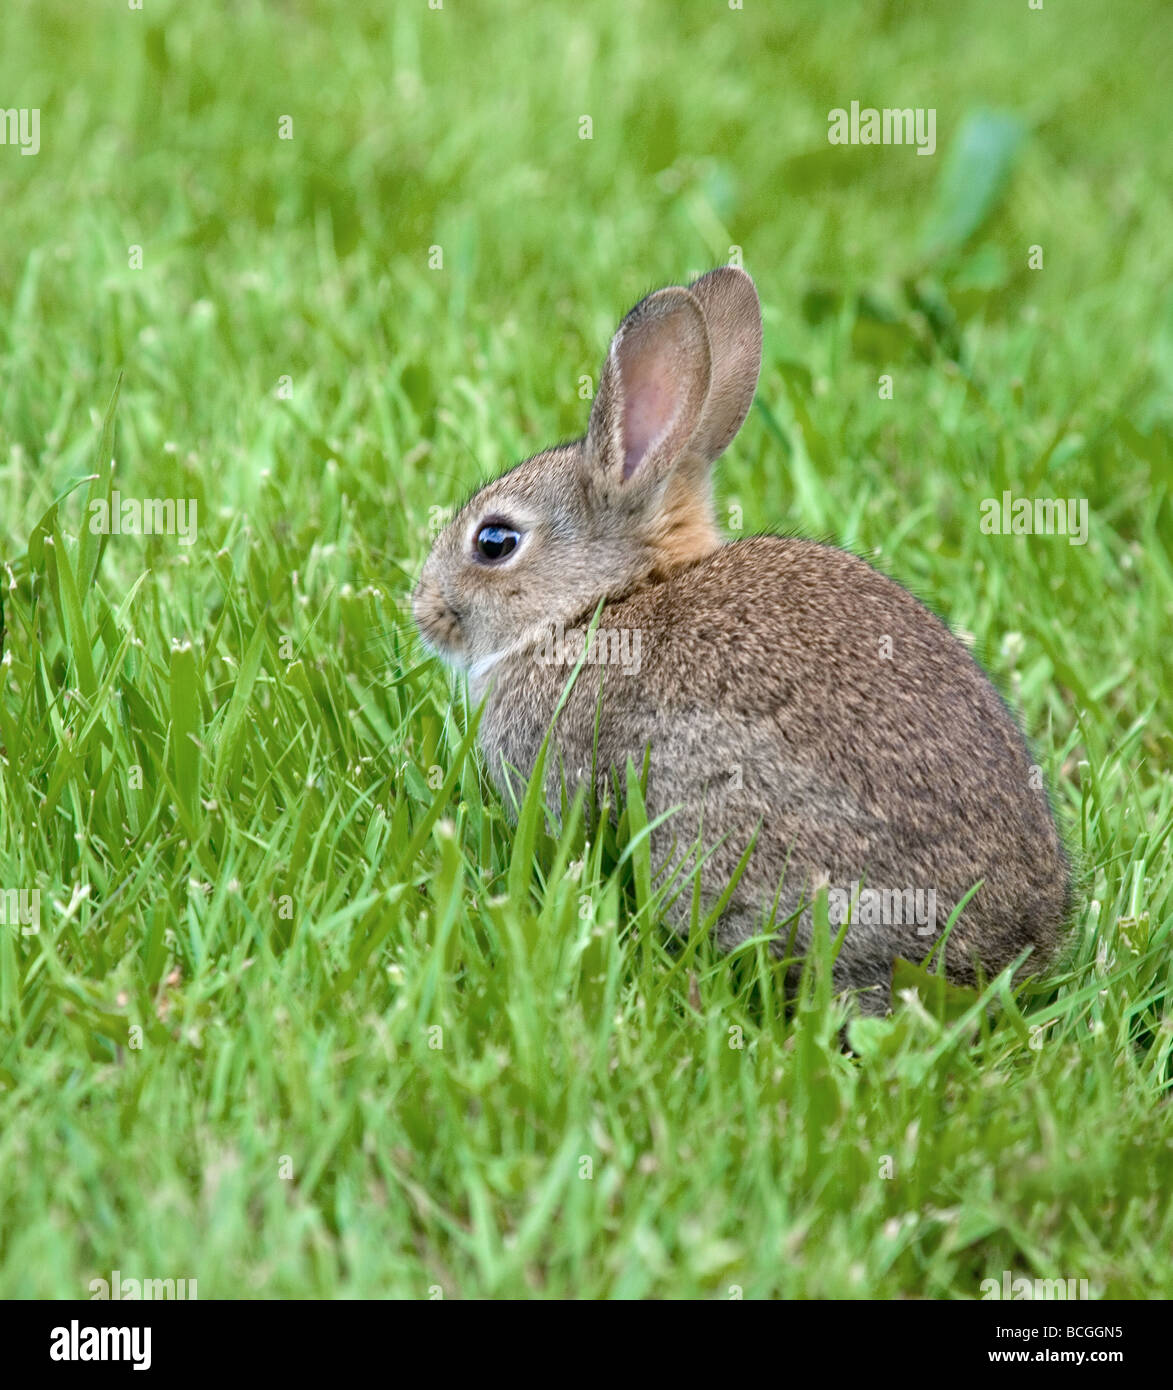 Junge europäische Kaninchen Oryctolagus Cuniculus Frühling Gras füttern Stockfoto